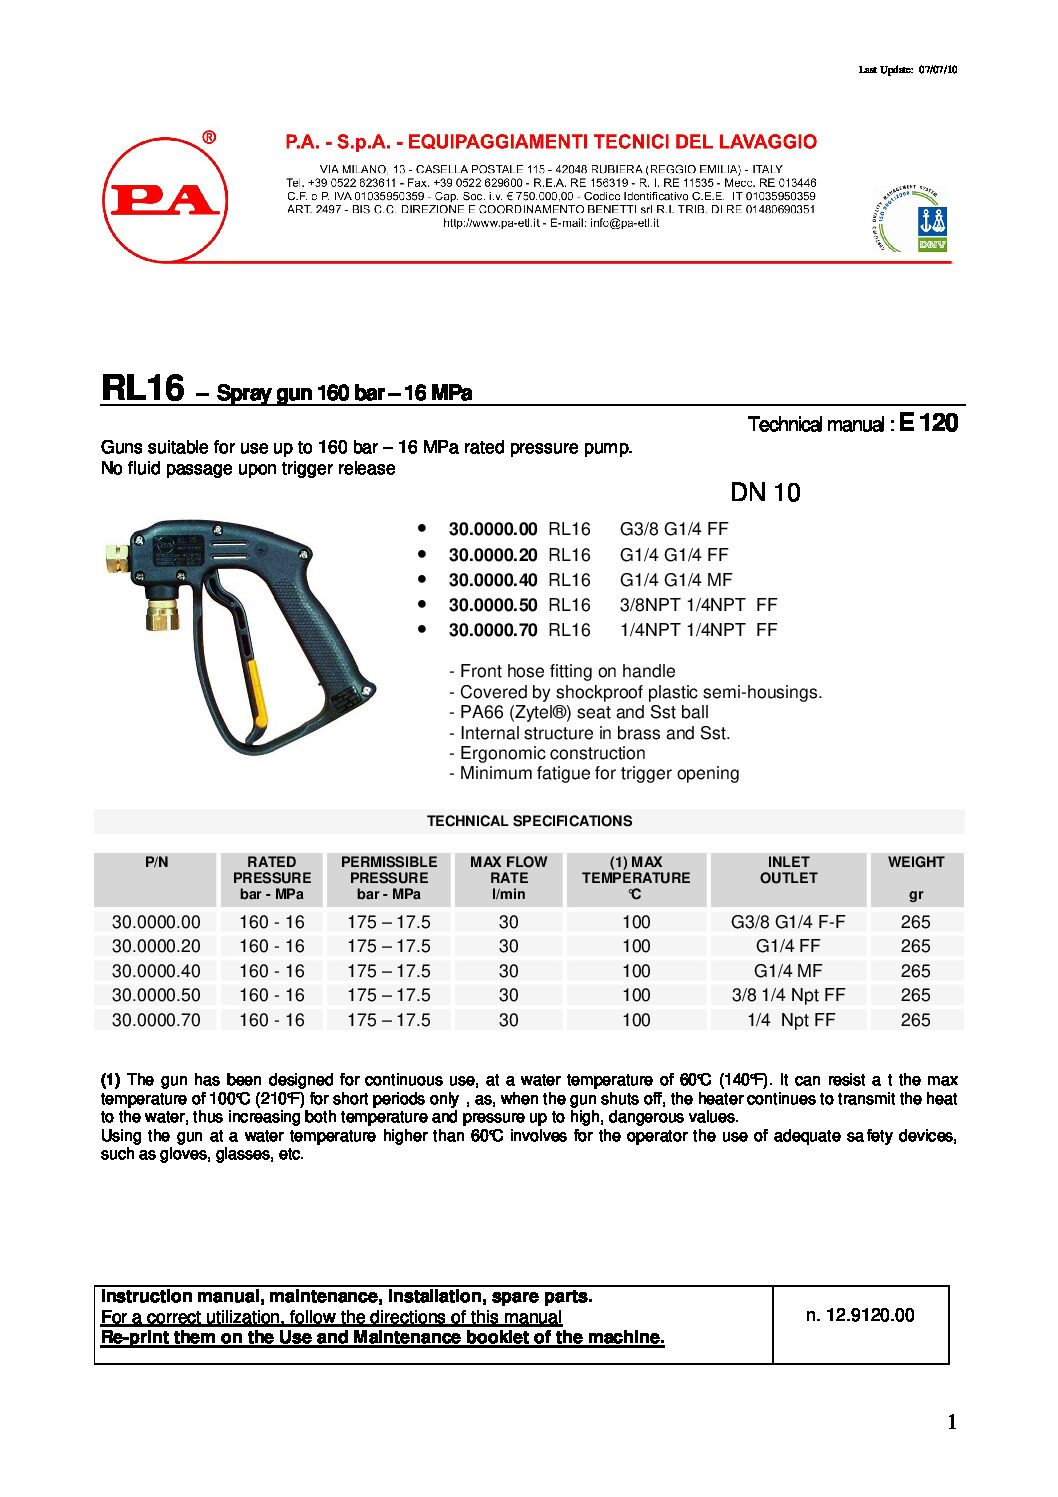 PA RL16 front entry spray gun technical information